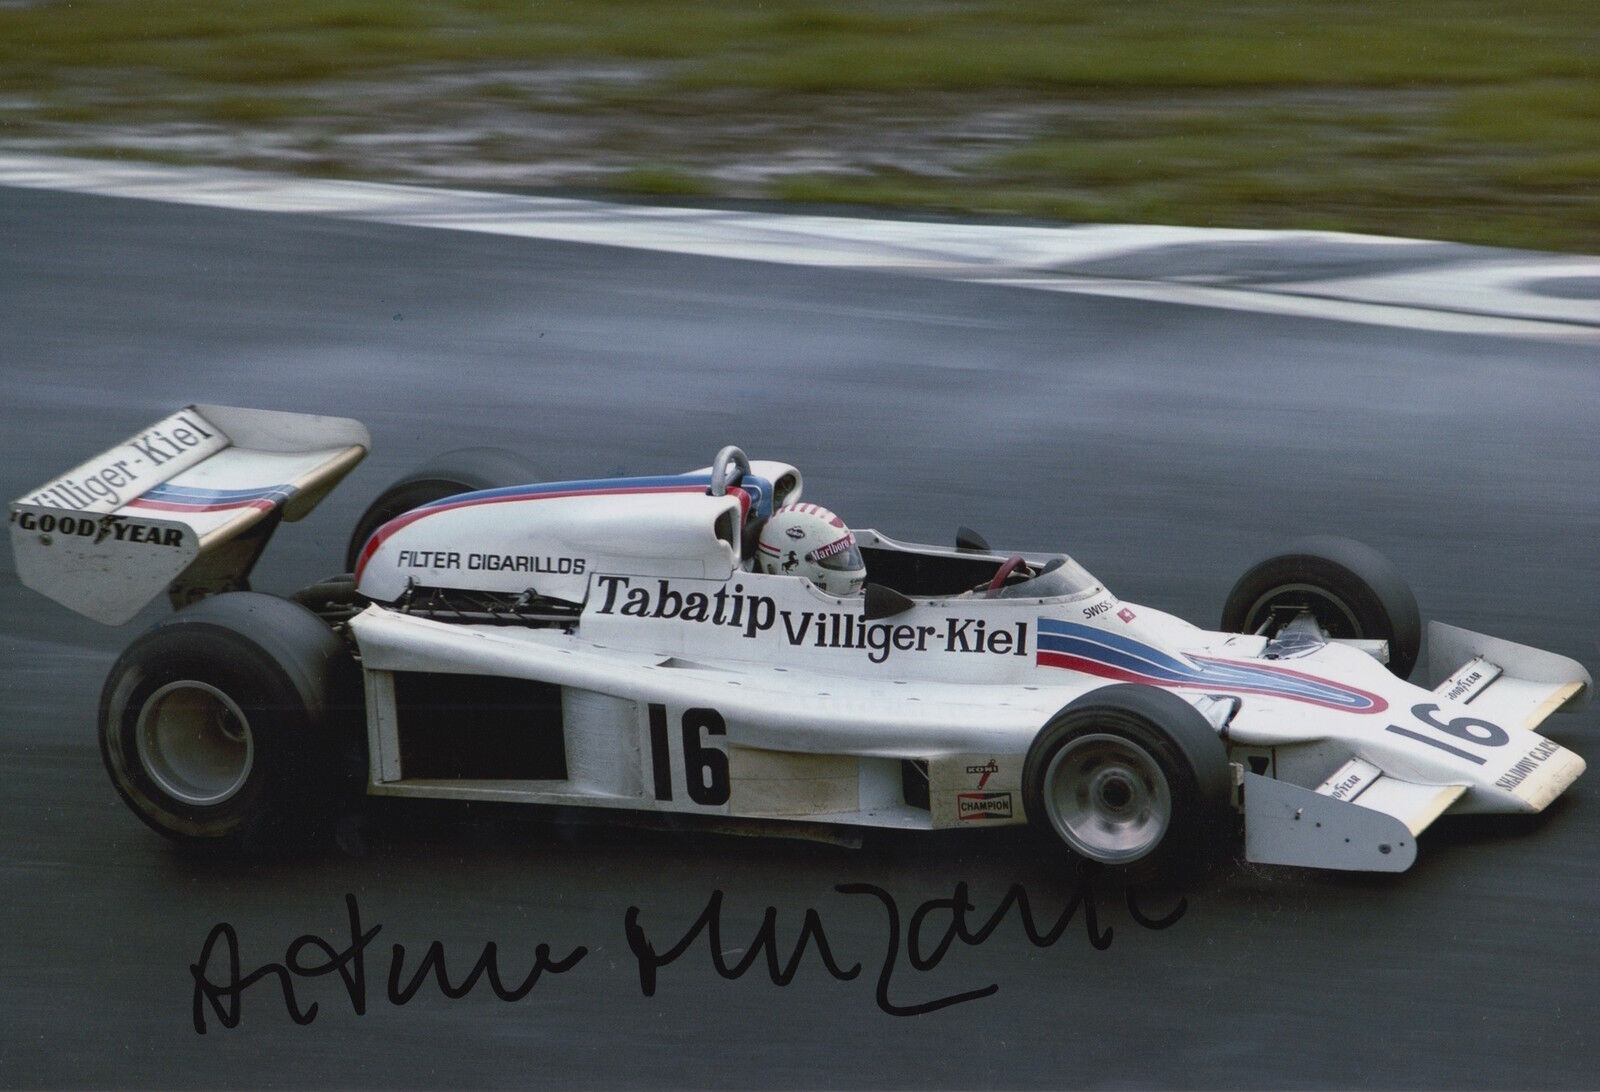 Arturo Merzario Hand Signed 12x8 Photo Poster painting Formula 1.